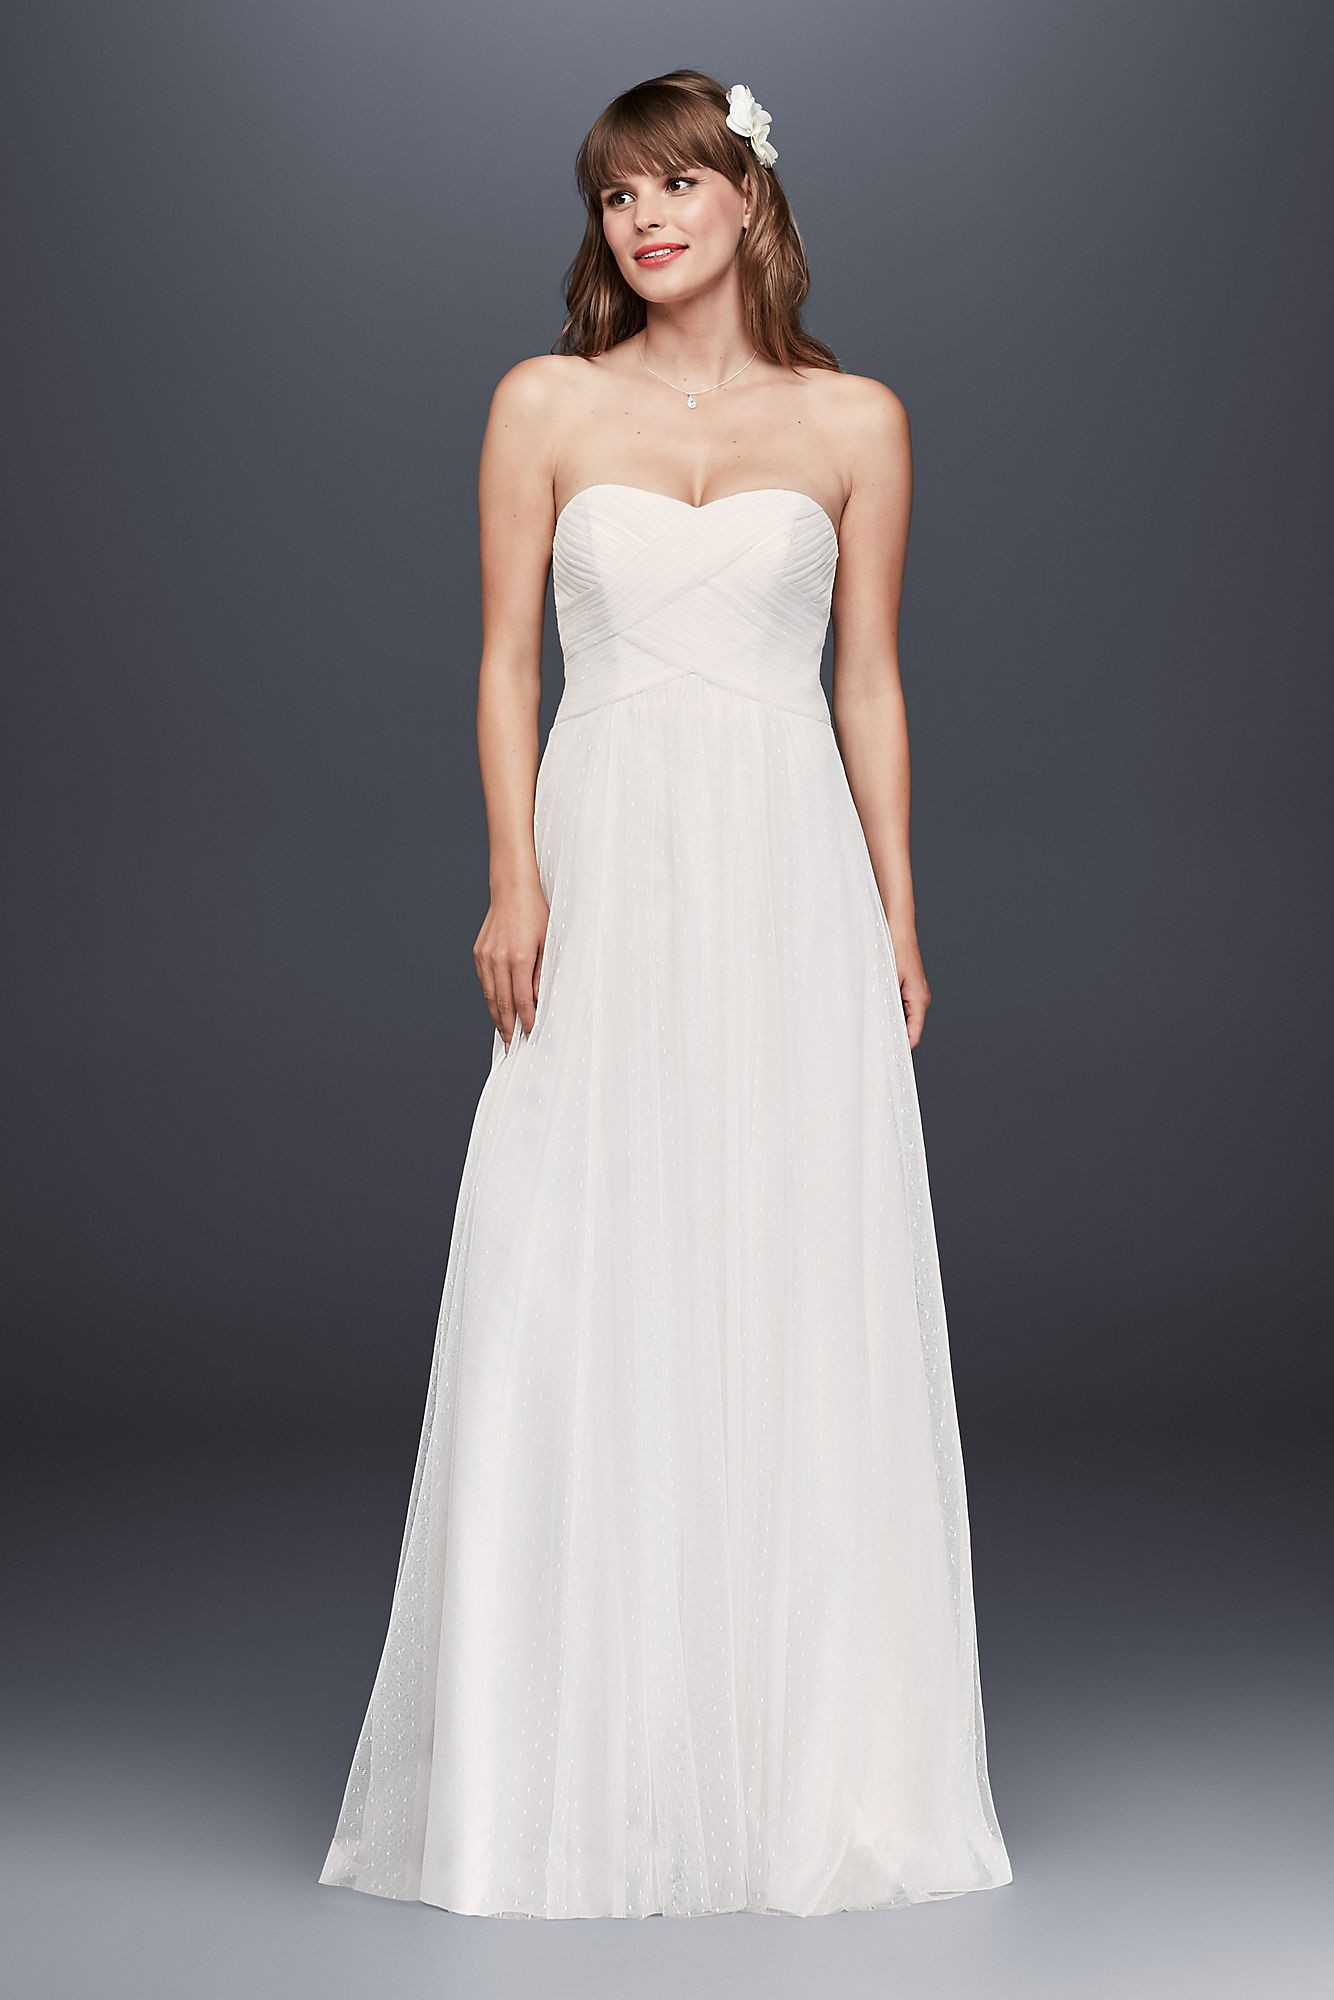 Empire Wedding Dress
 4XLWG3438 Extra Length Swiss Dot Tulle Empire Waist Gown